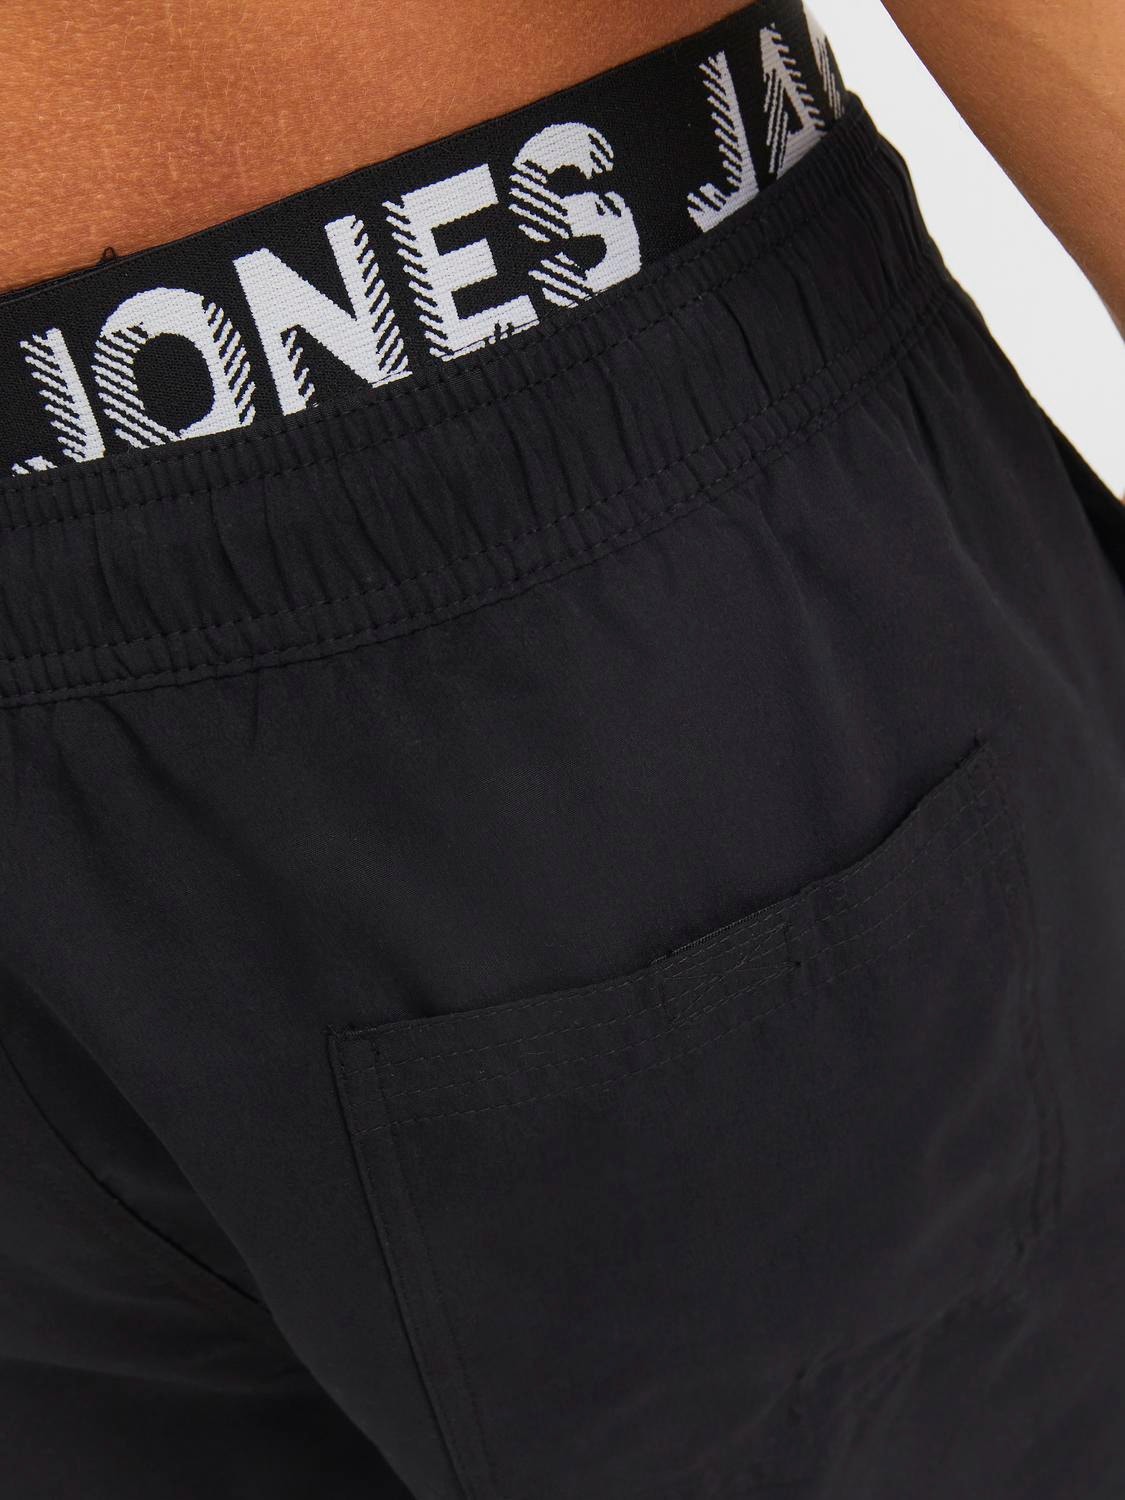 Jack & Jones Regular Fit Swim shorts -Black - 12227254